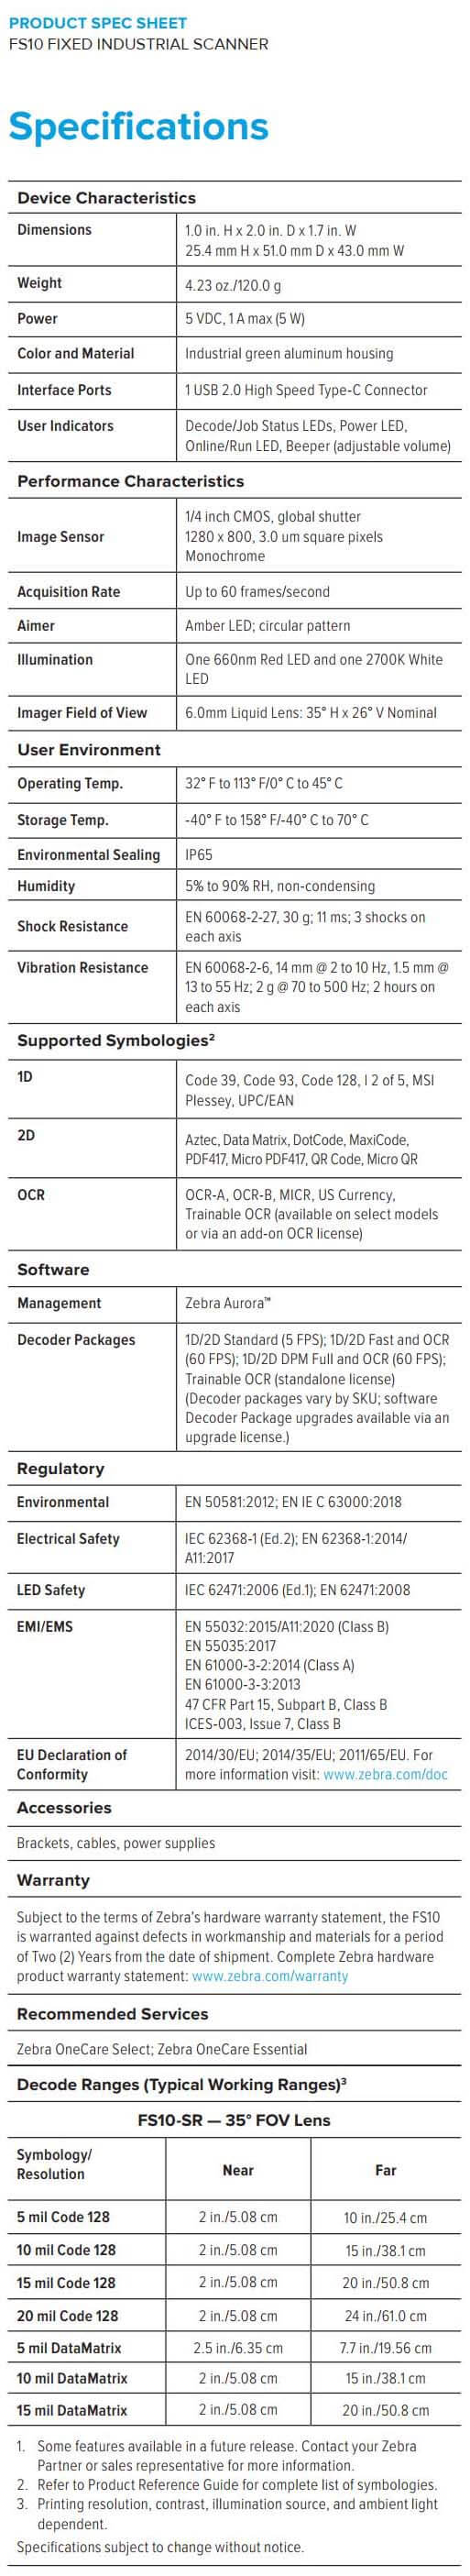 Zebra FS10 Fixed Industrial Scanner data sheet